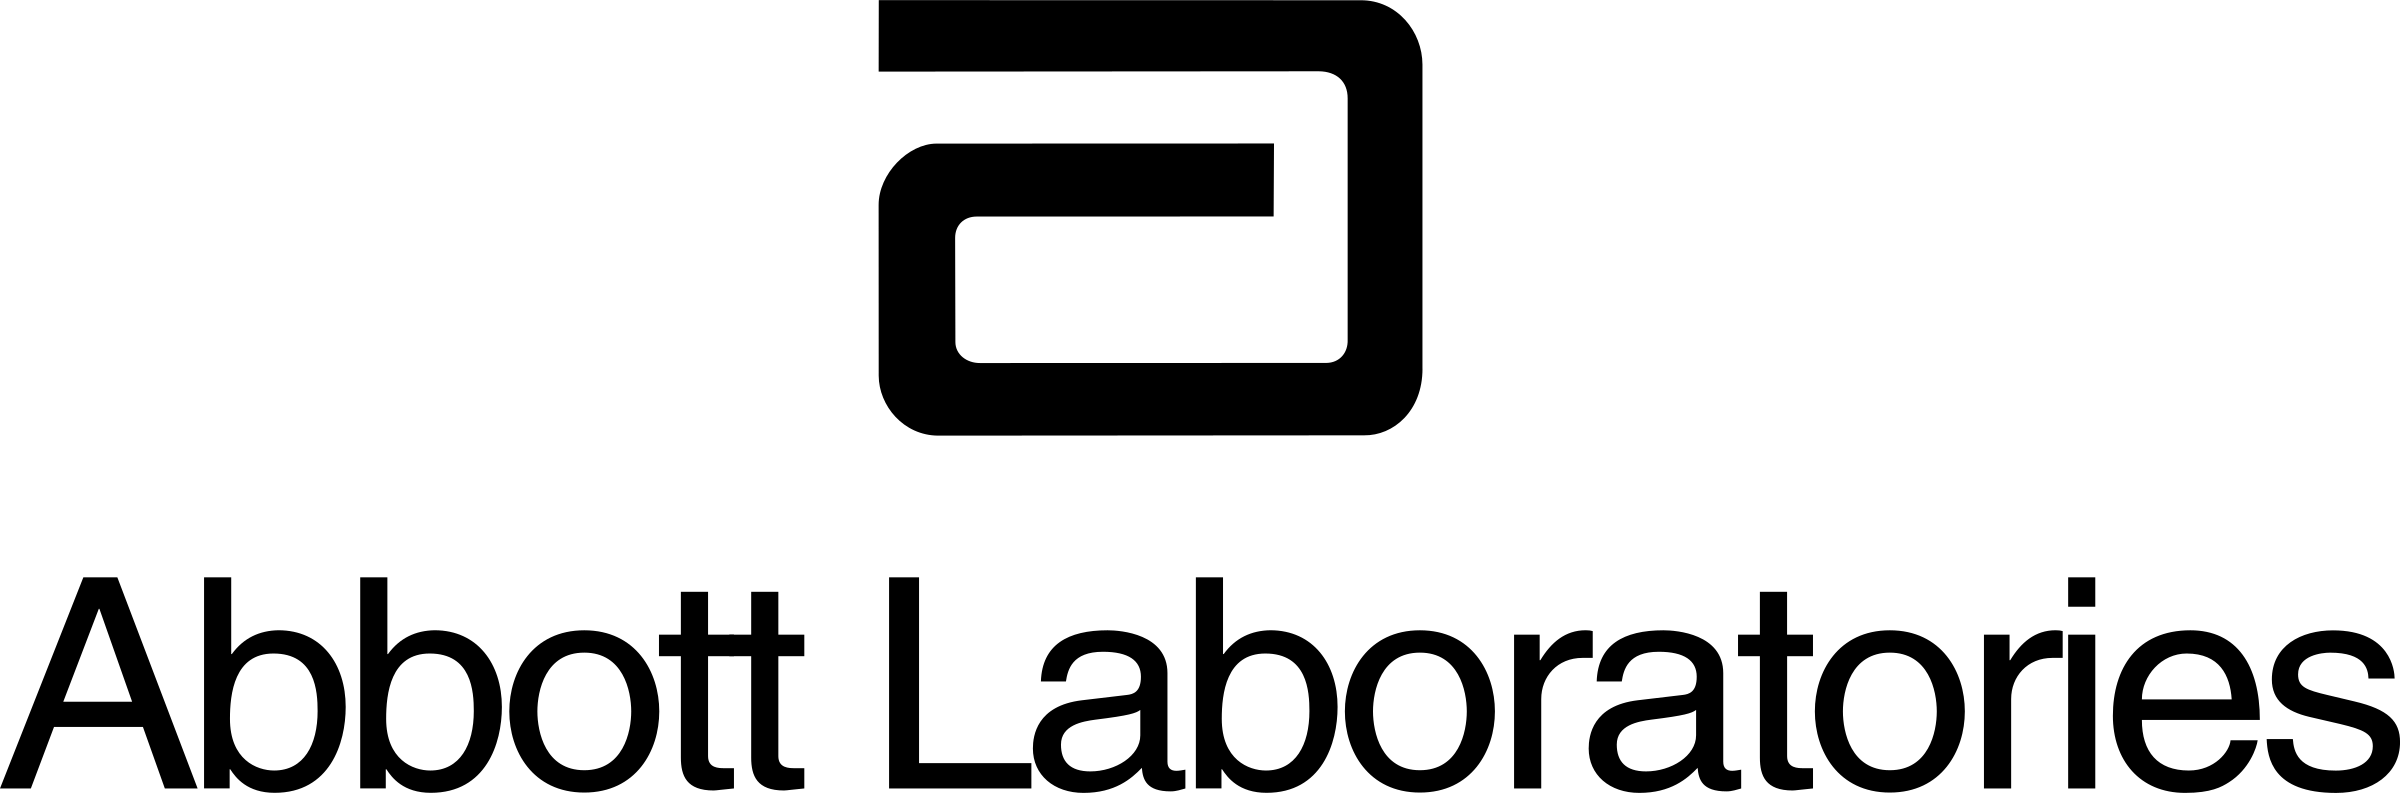 Abbott Laboratories Logo PNG Transparent & SVG Vector.